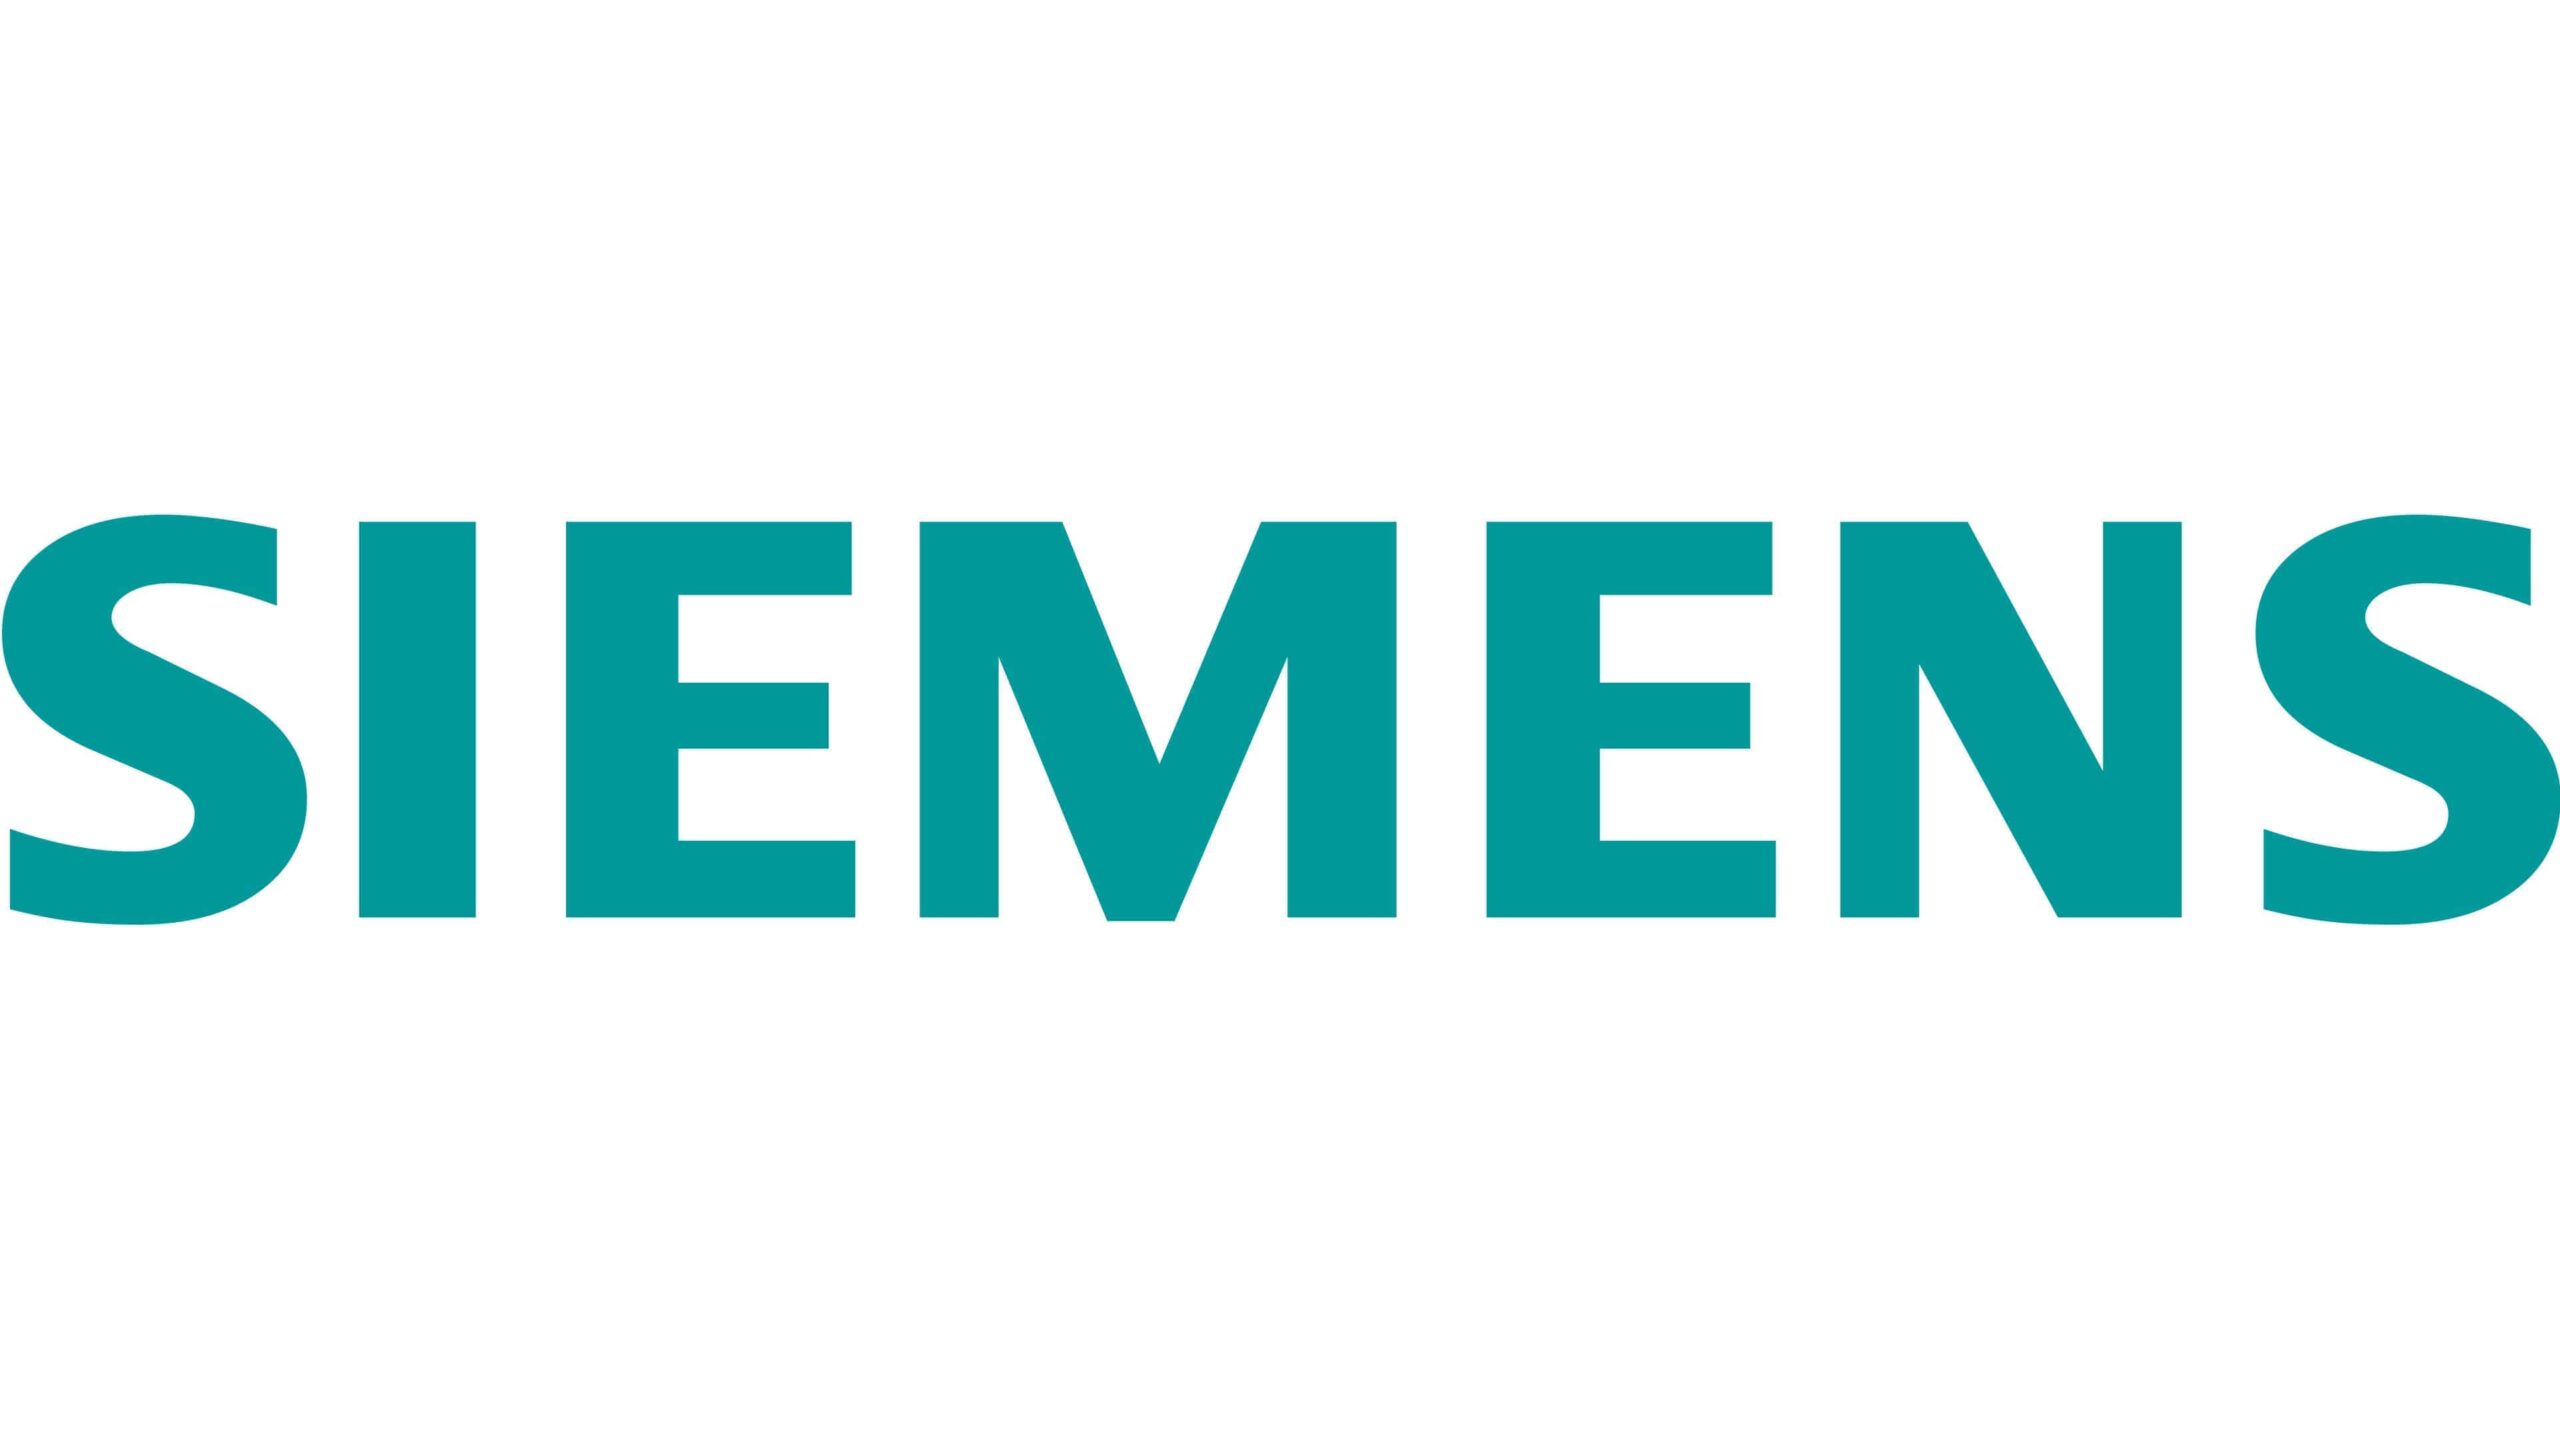 Siemens-Logo-1991-present